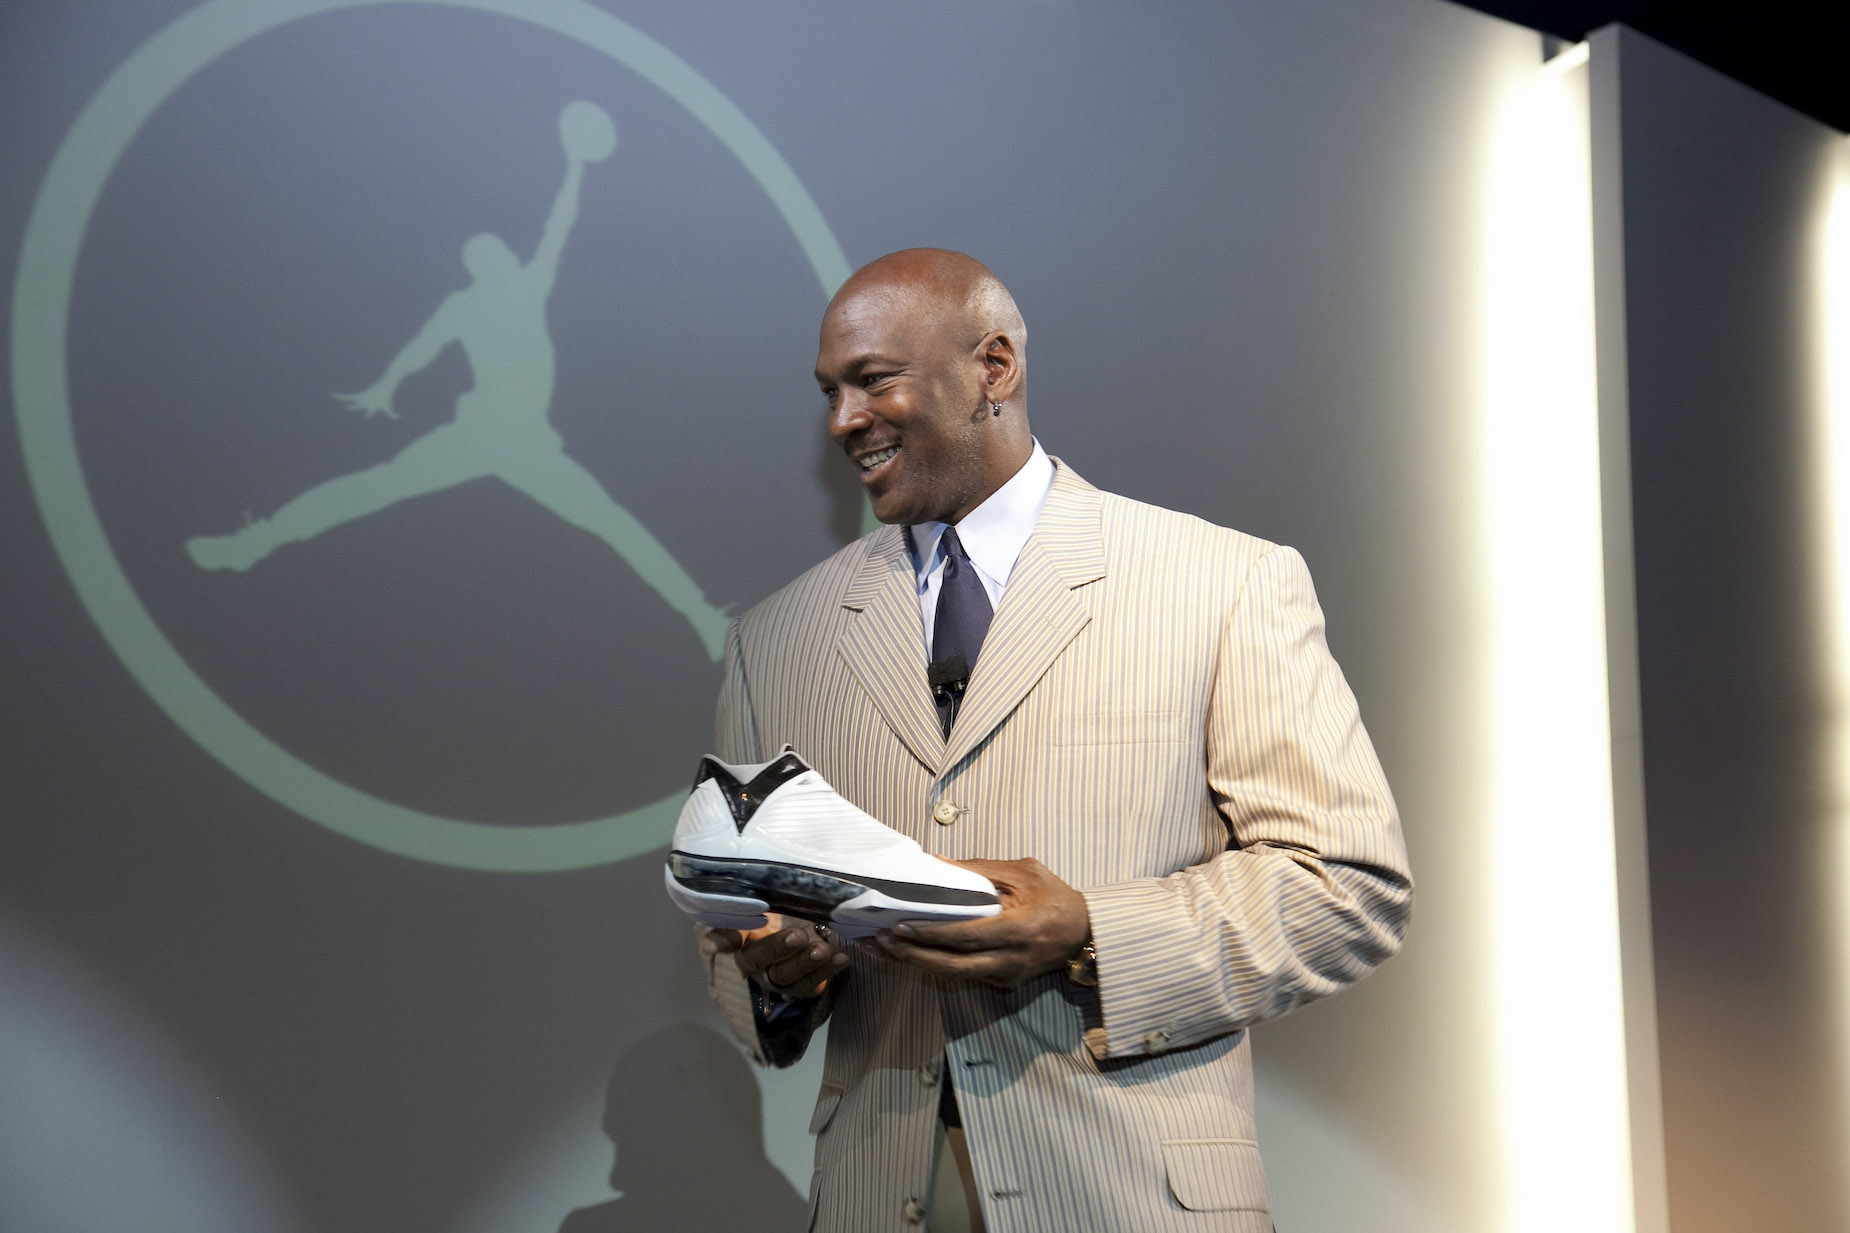 Michael Jordan holds an Air Jordan shoe during a 2009 media event.